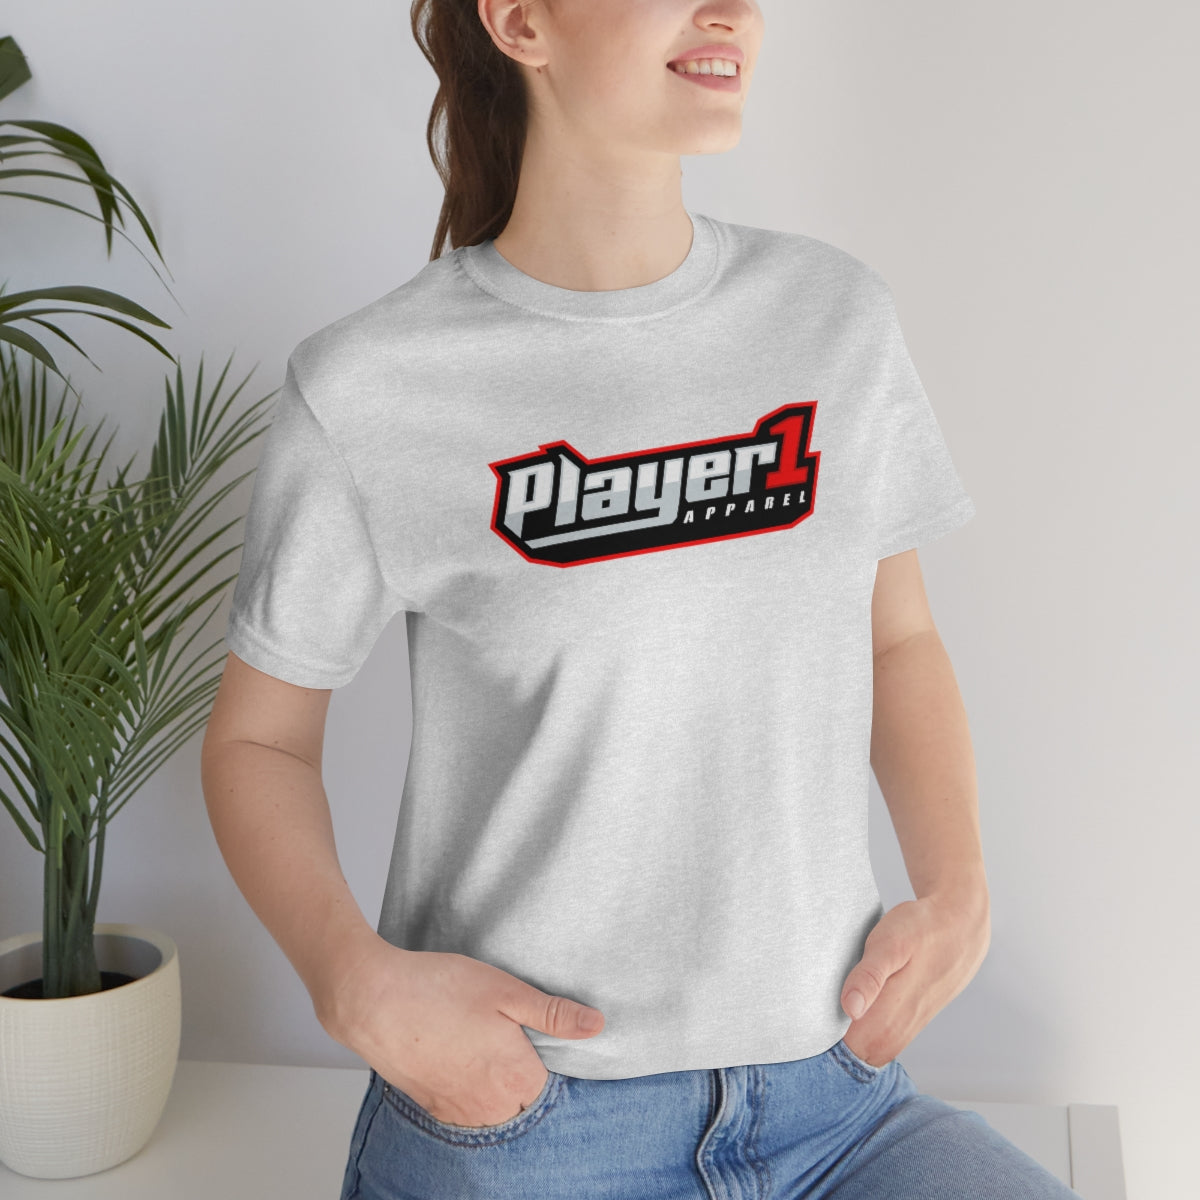 Player1Apparel Unisex T-Shirt